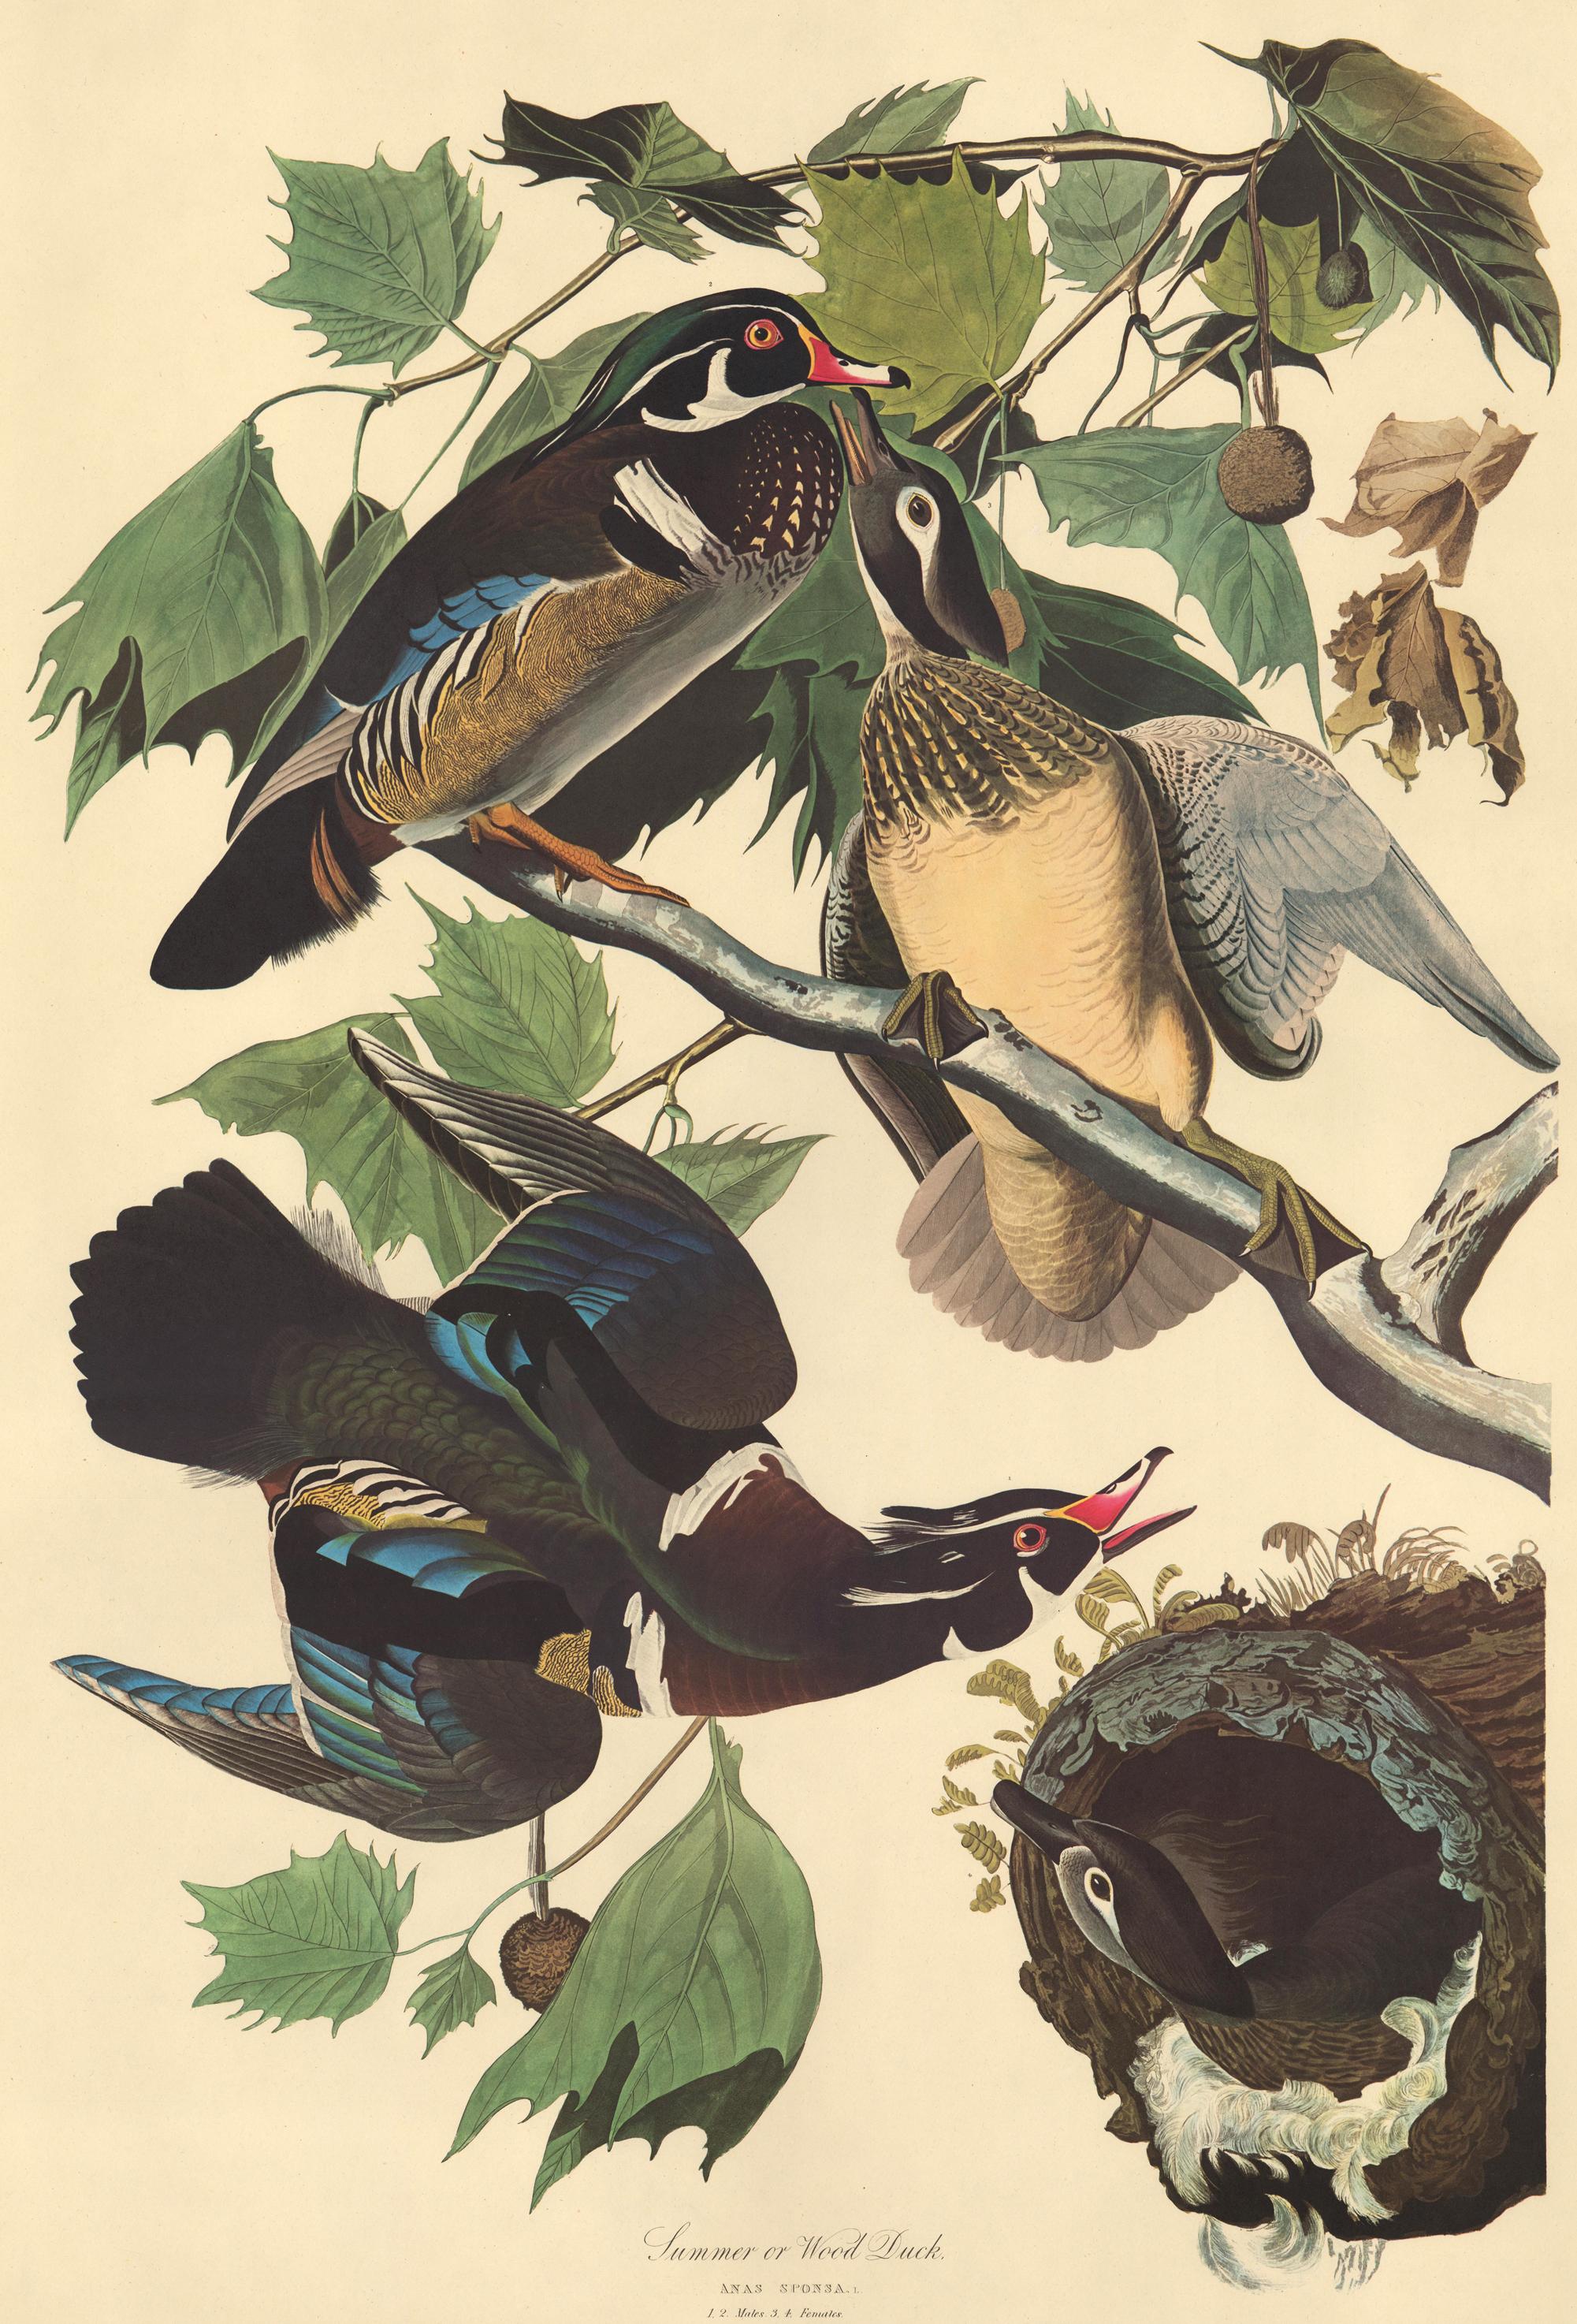 Summer or Wood Duck by John James Audubon, Amsterdam Edition